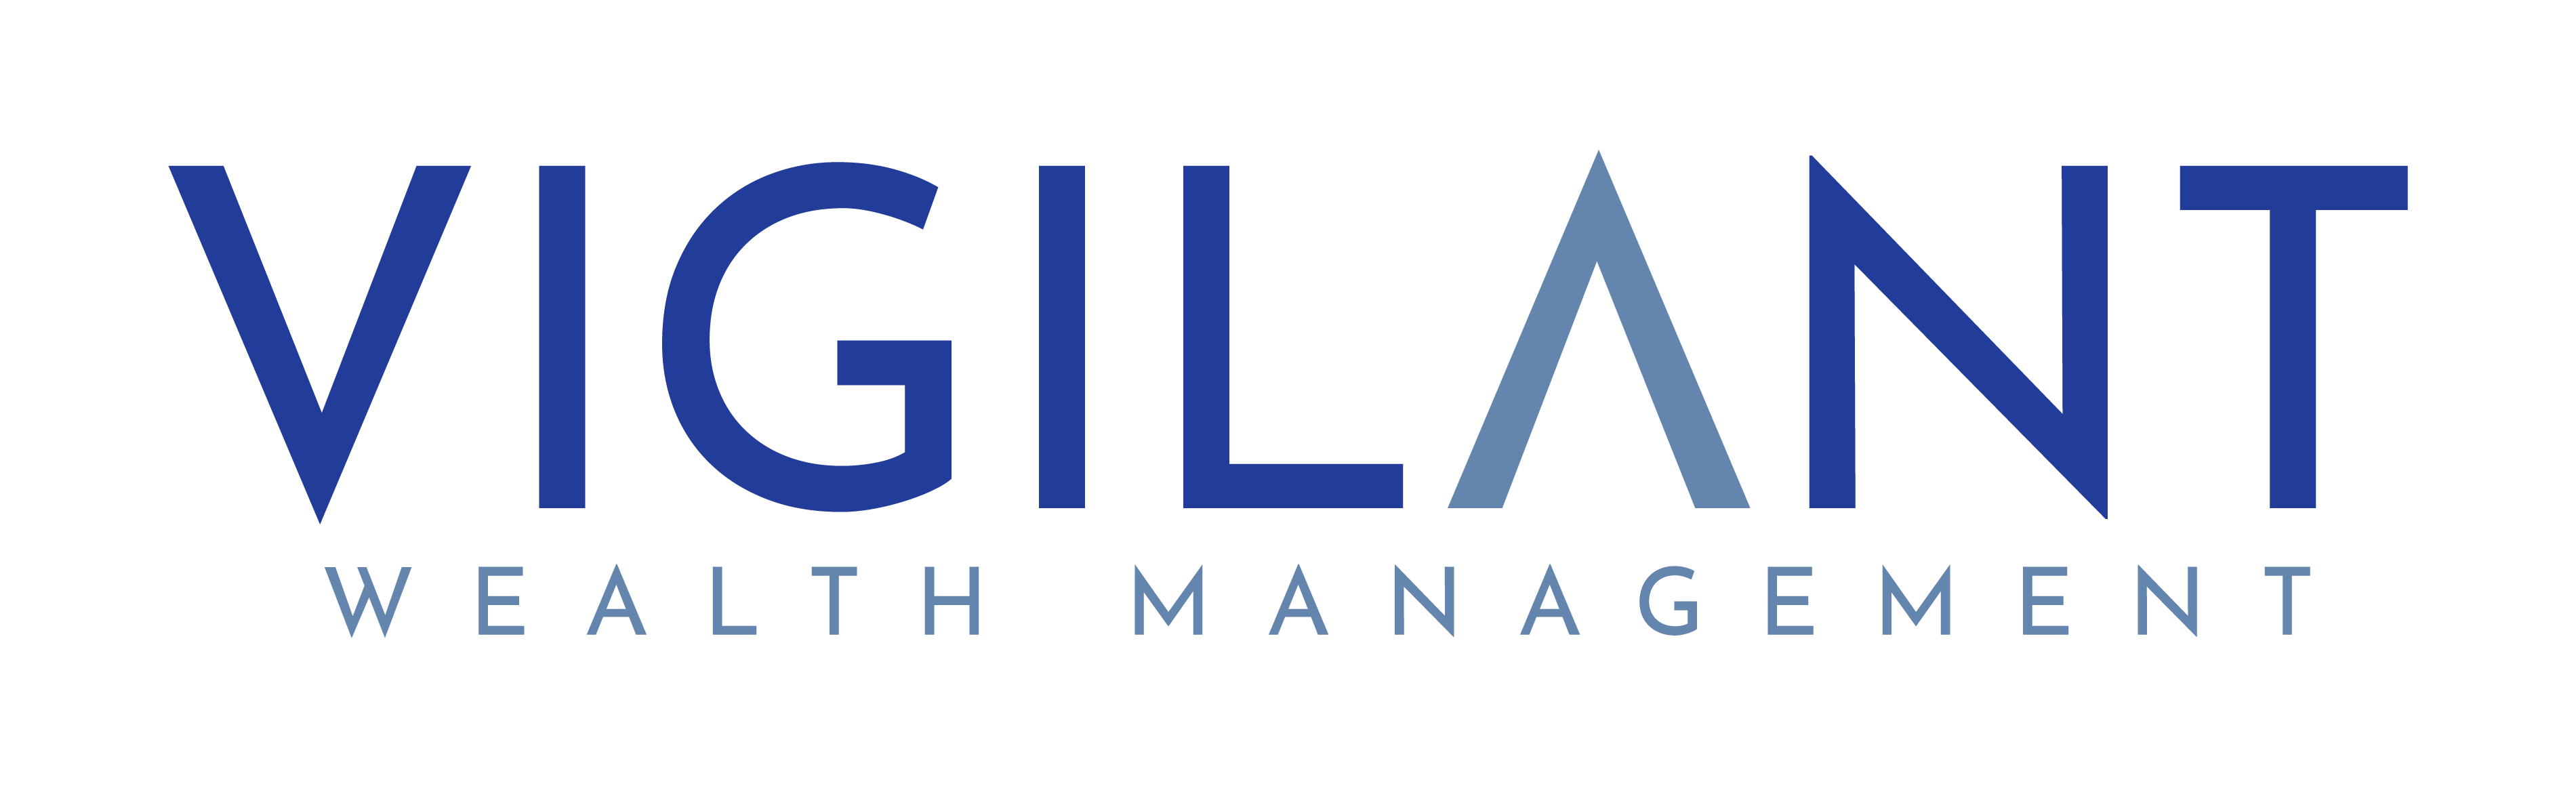 Vigilant Wealth Management Logo